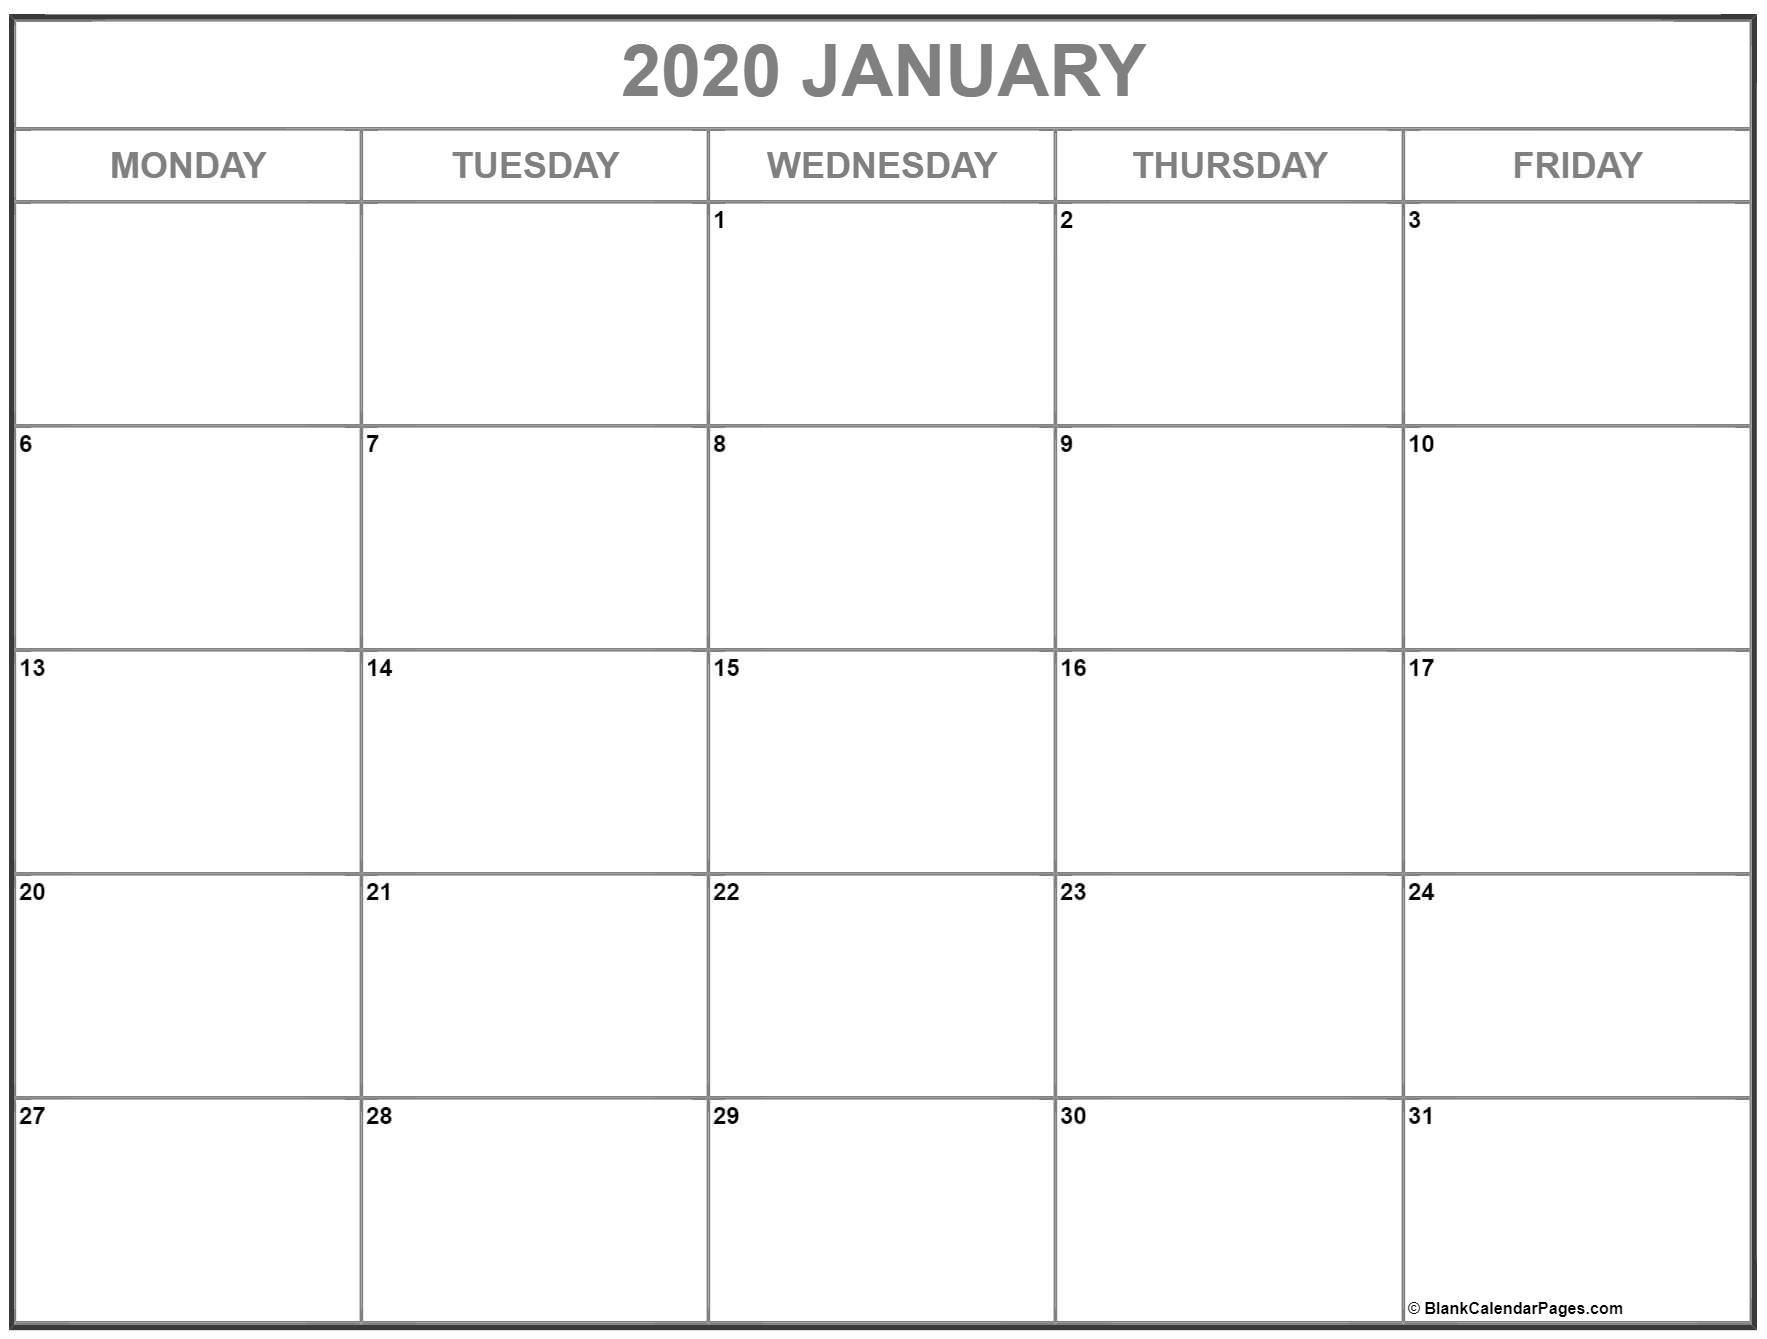 January 2020 Monday Calendar | Monday To Sunday Blank Monday To Friday Calendar Template